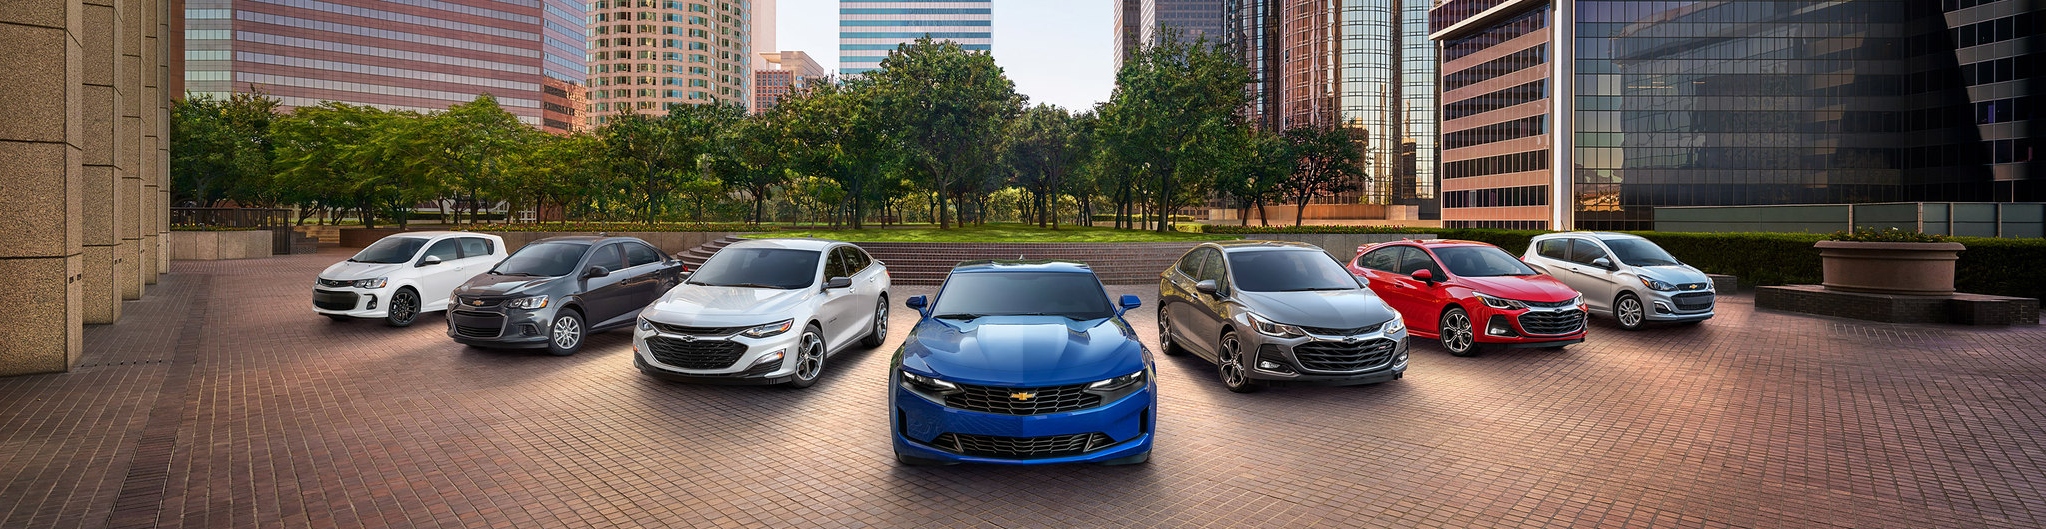 Chevrolet Sedans Lineup | Newport News, VA